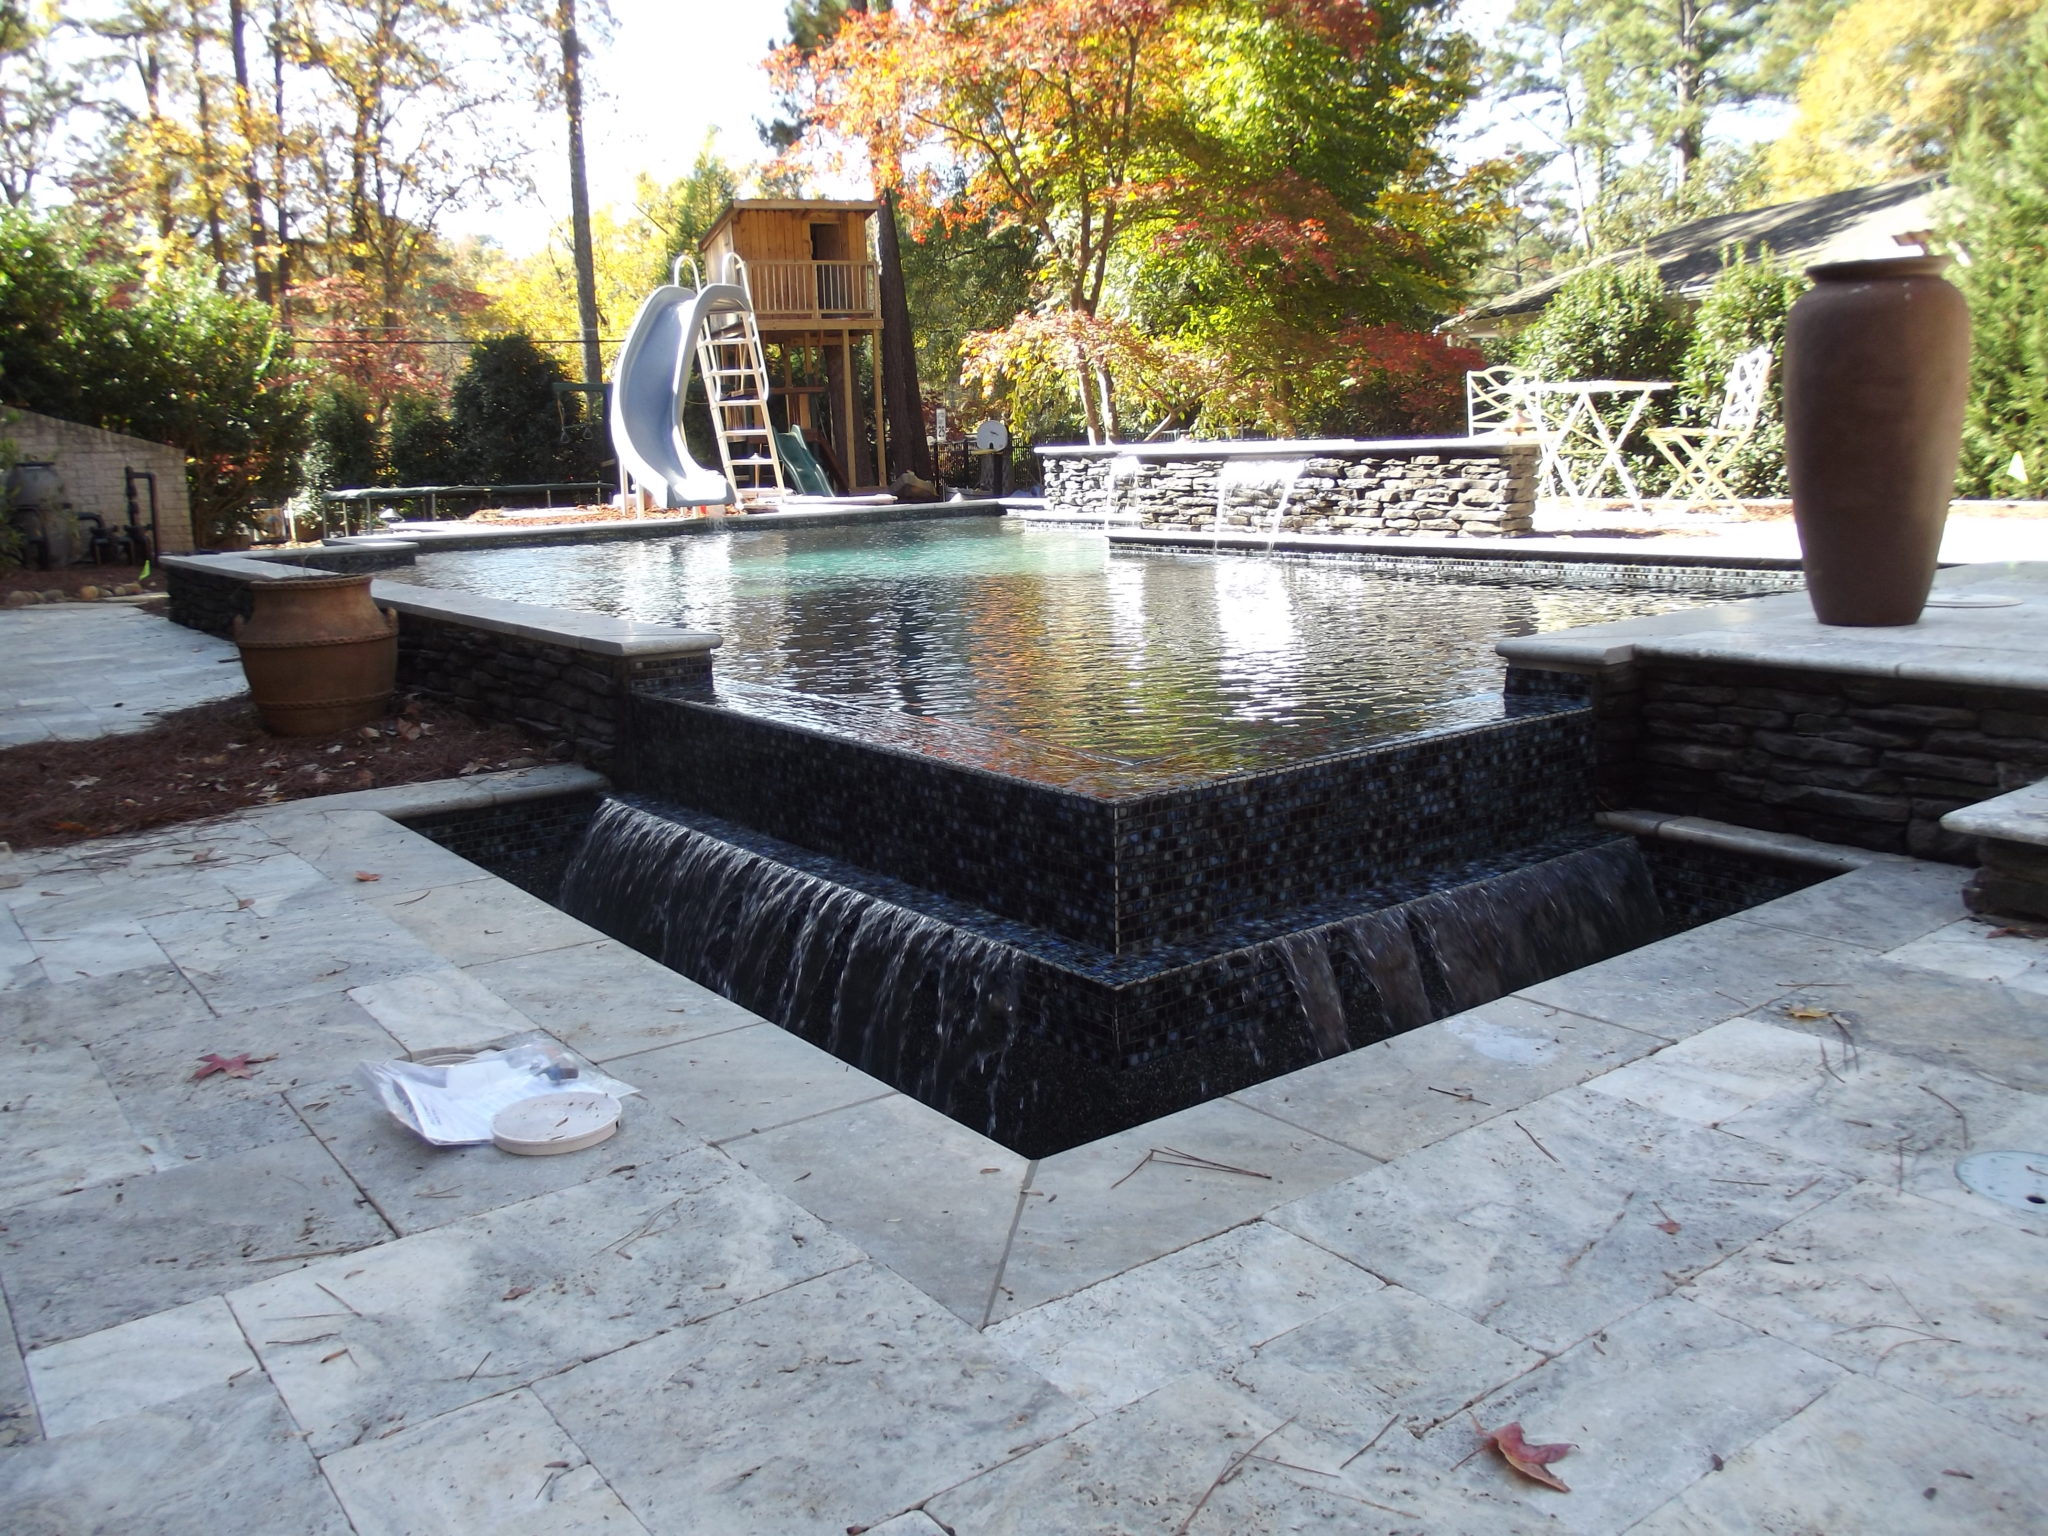 A stylish modern vanishing edge pool featuring black tile.